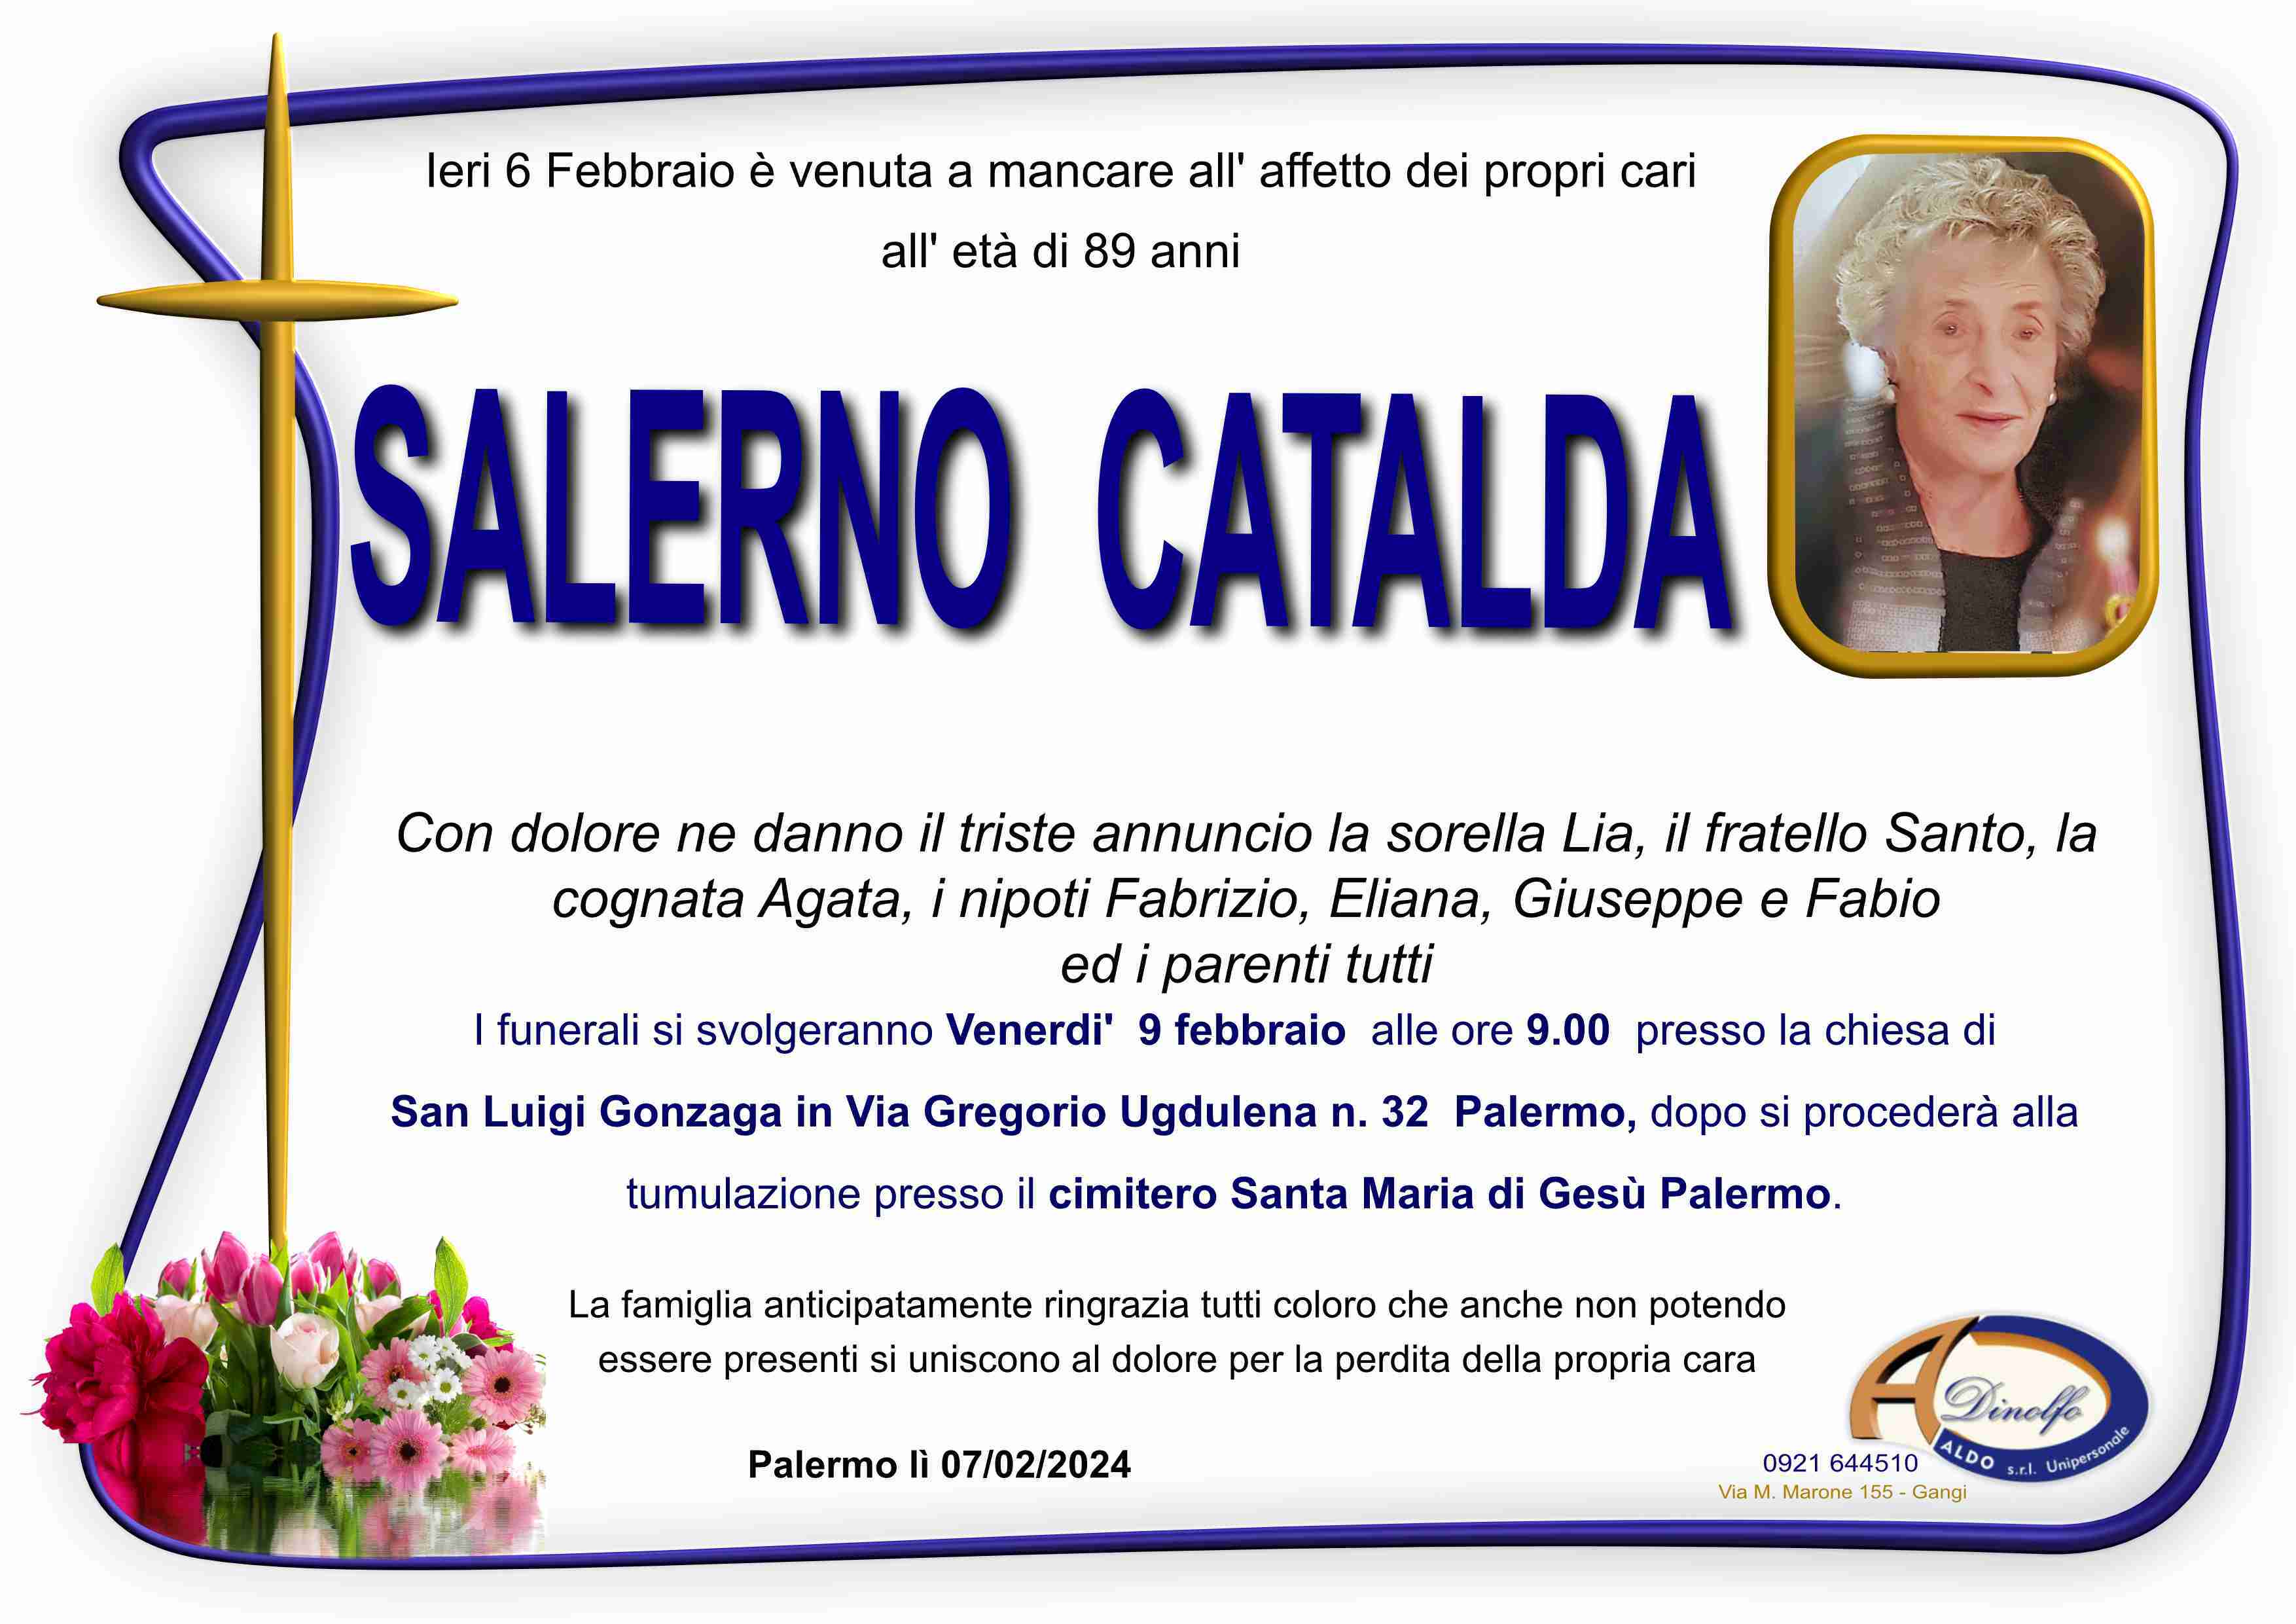 Catalda Salerno